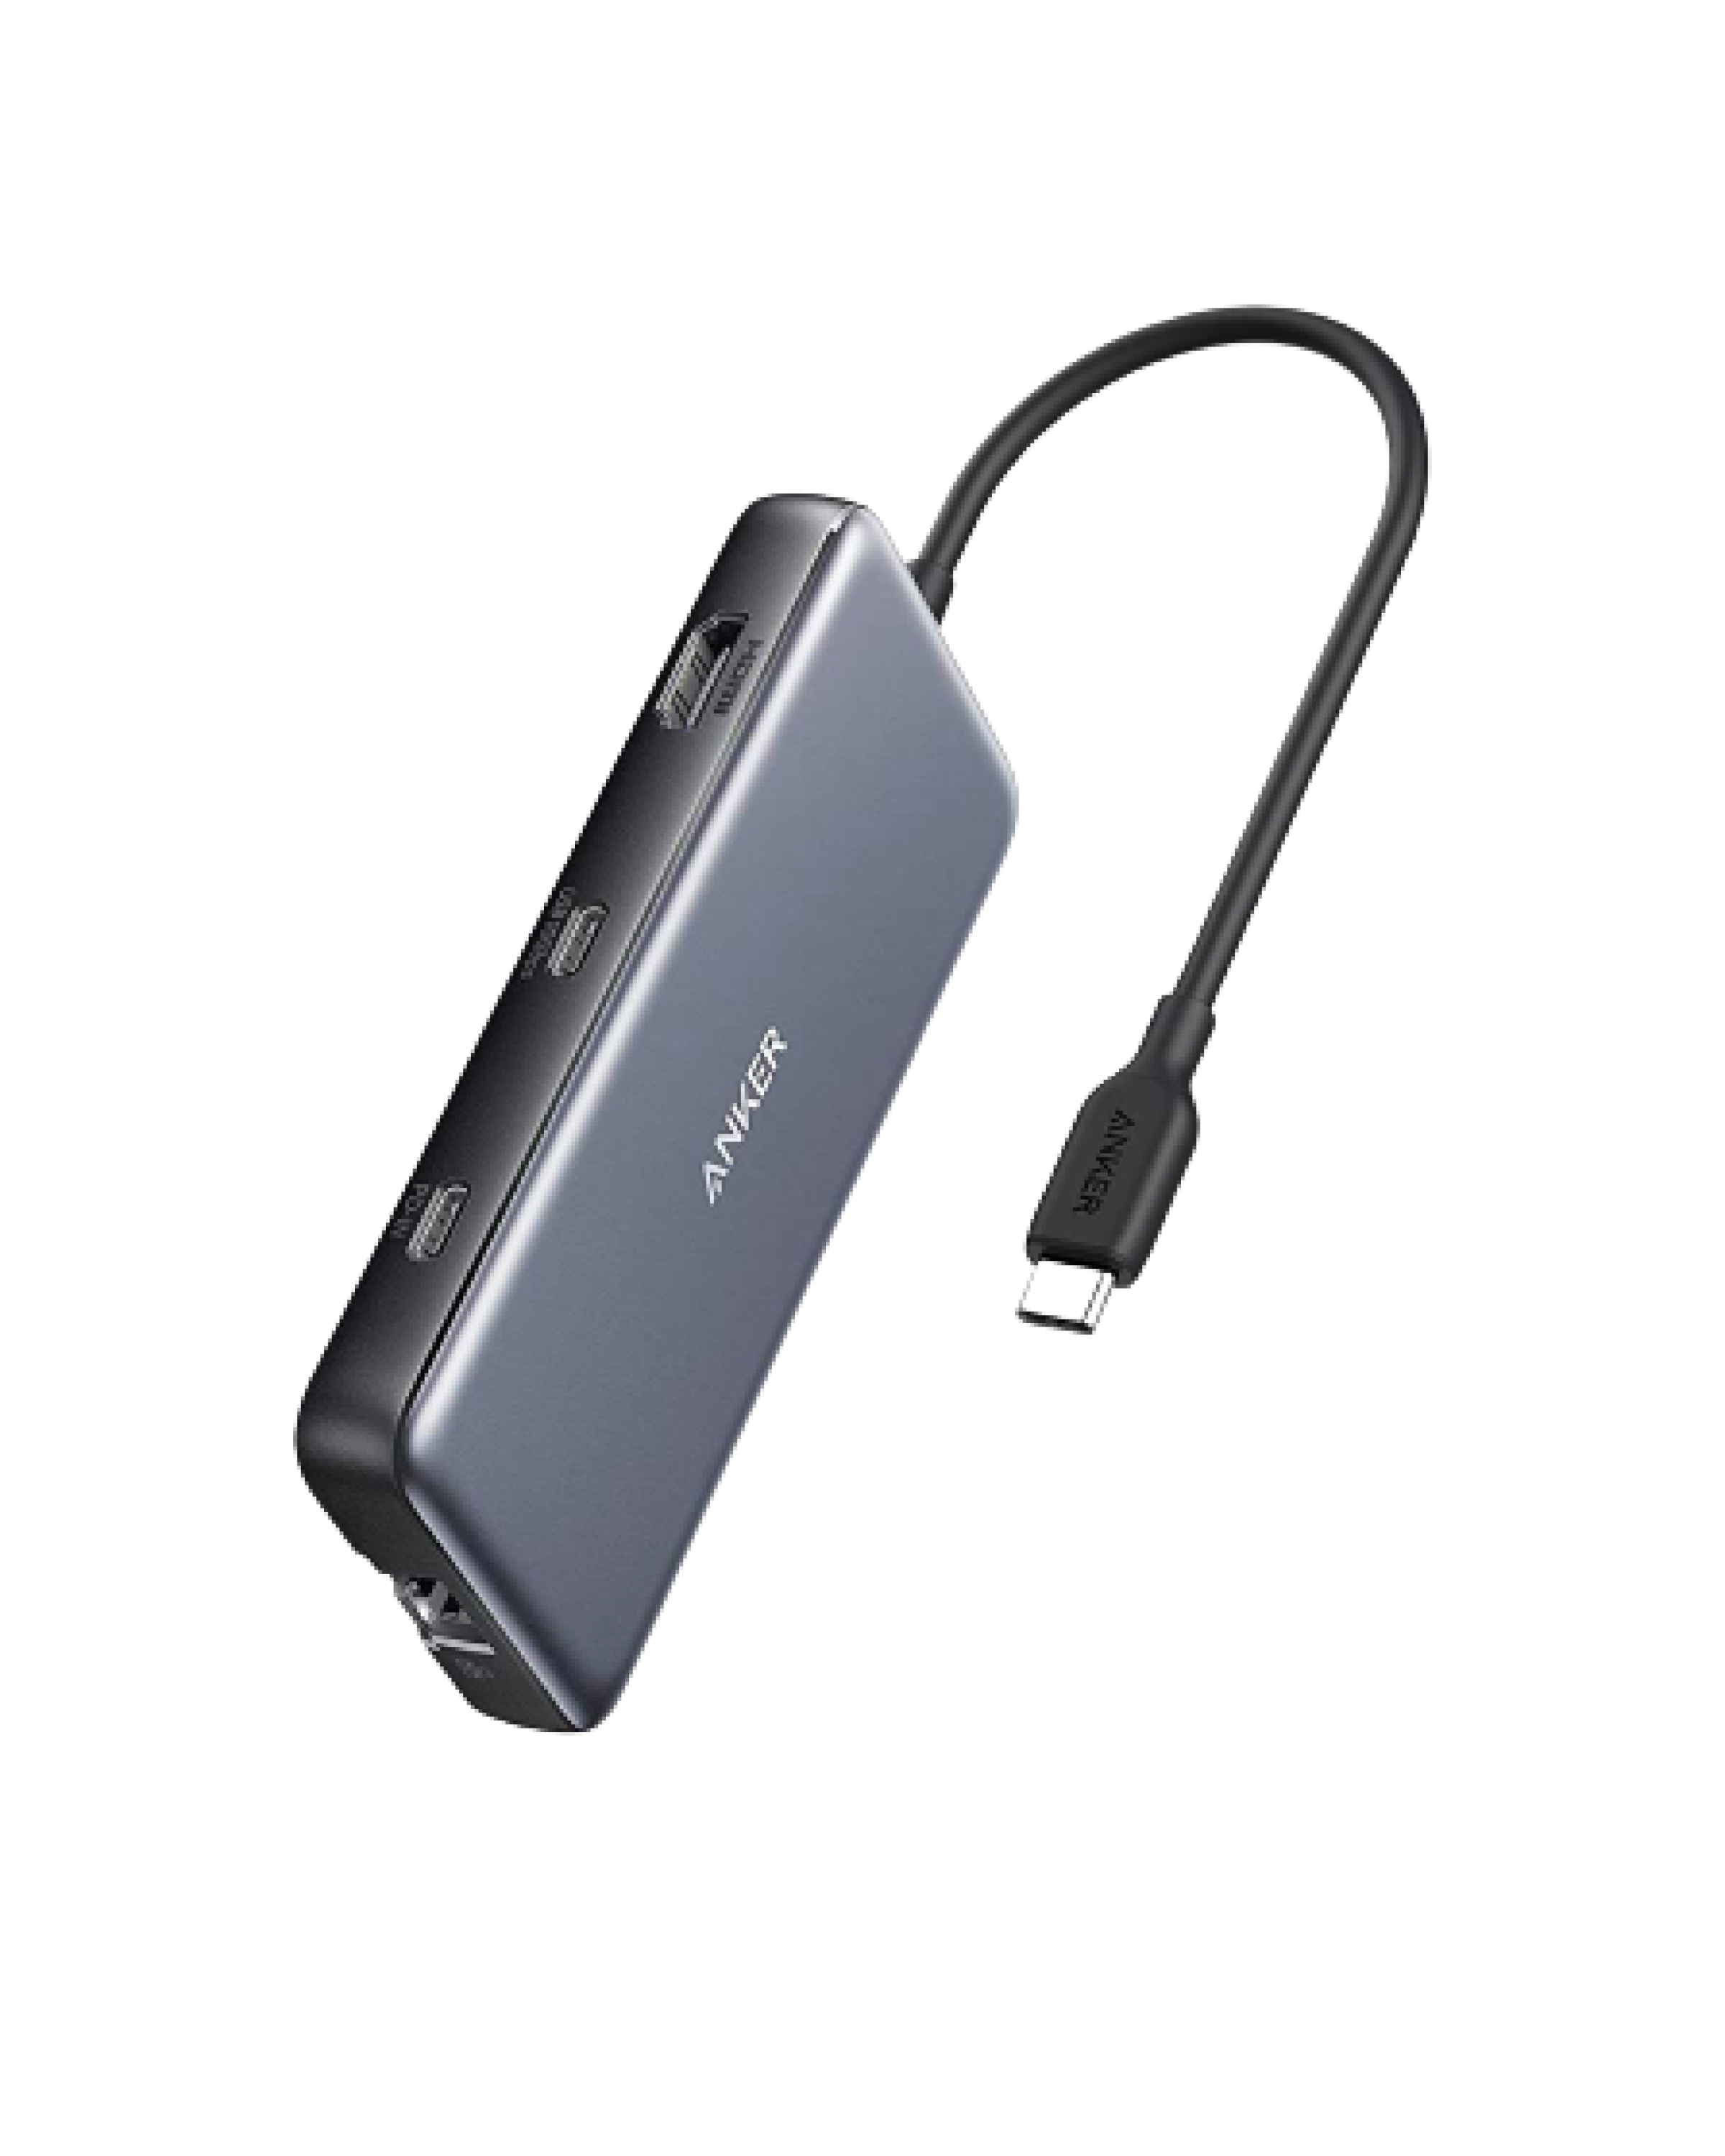 Anker USB-C Hub (8-in-1) - Anker